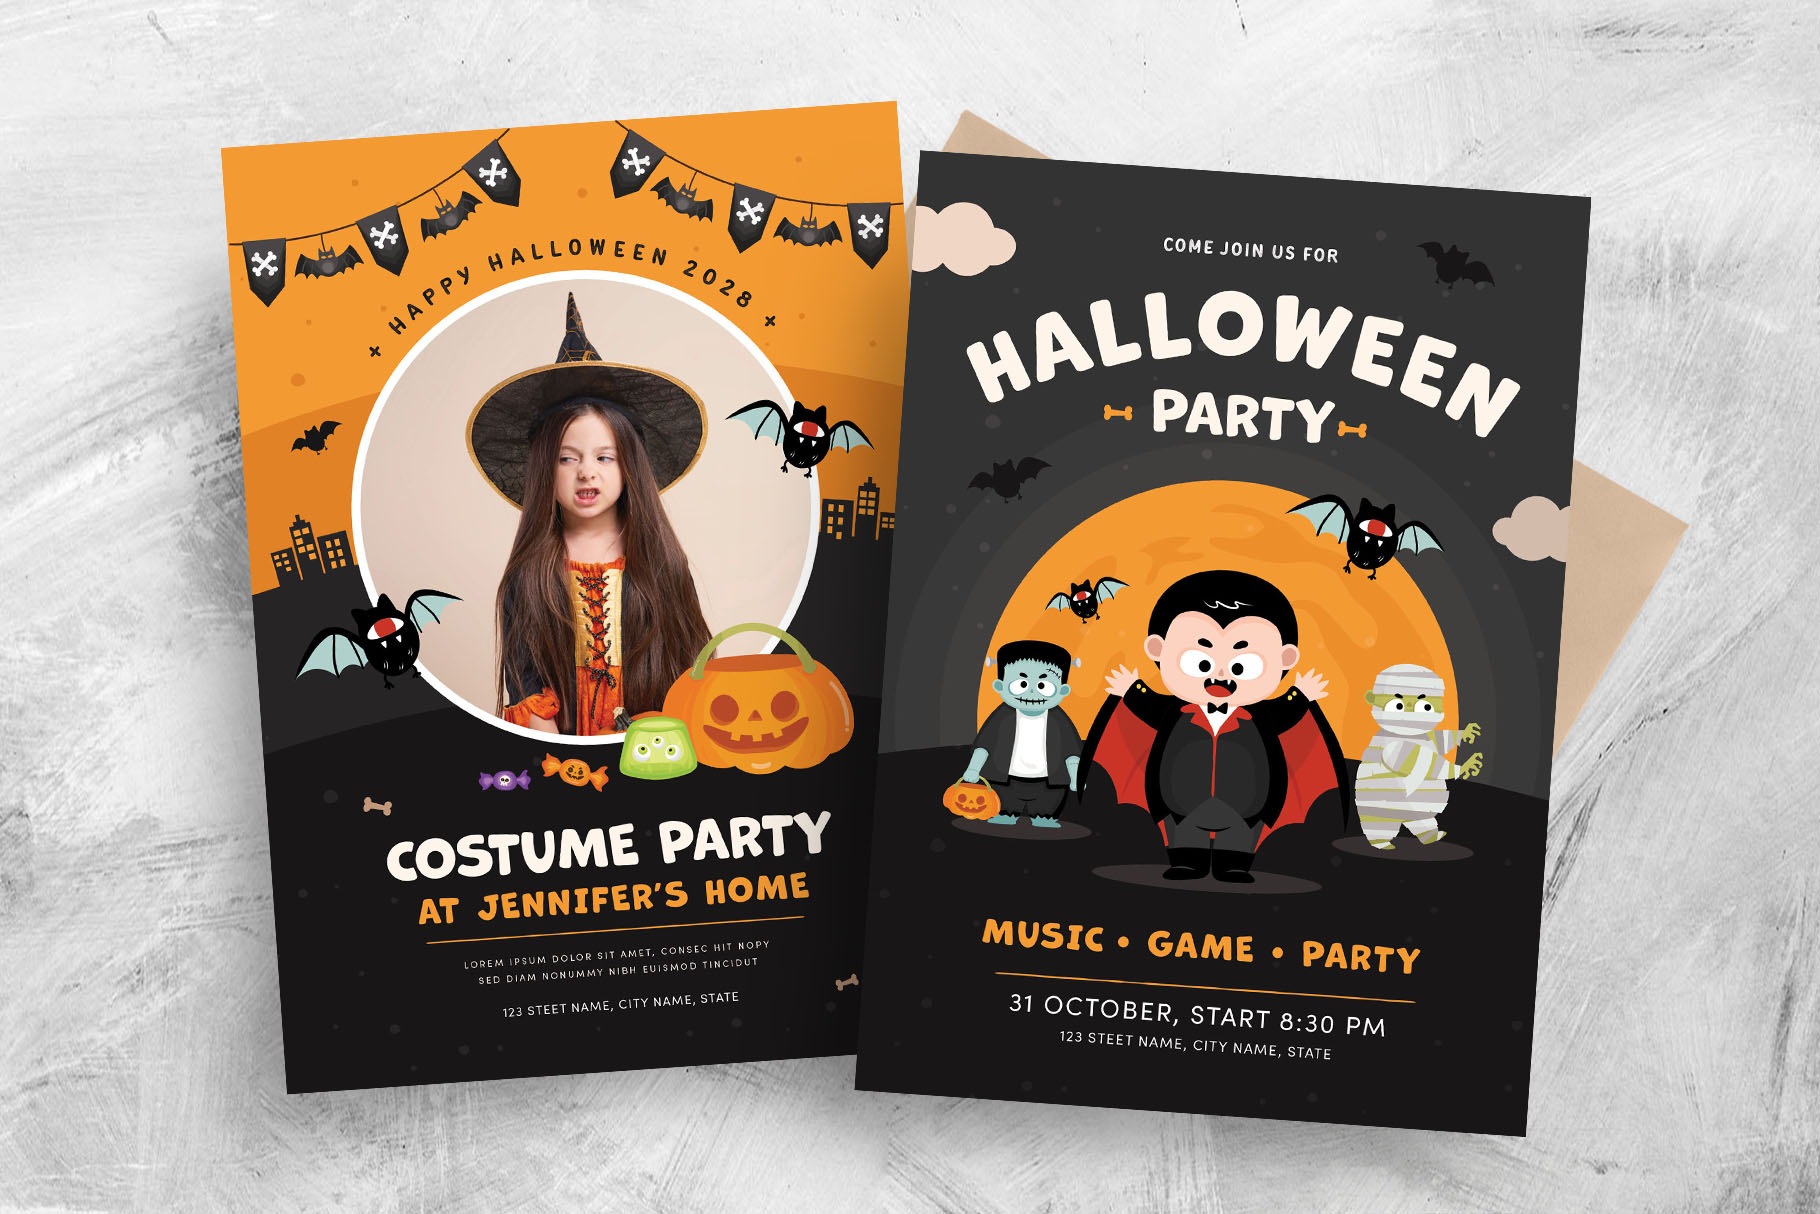 Halloween Party Flyer (PSD, AI, Vector Formats)